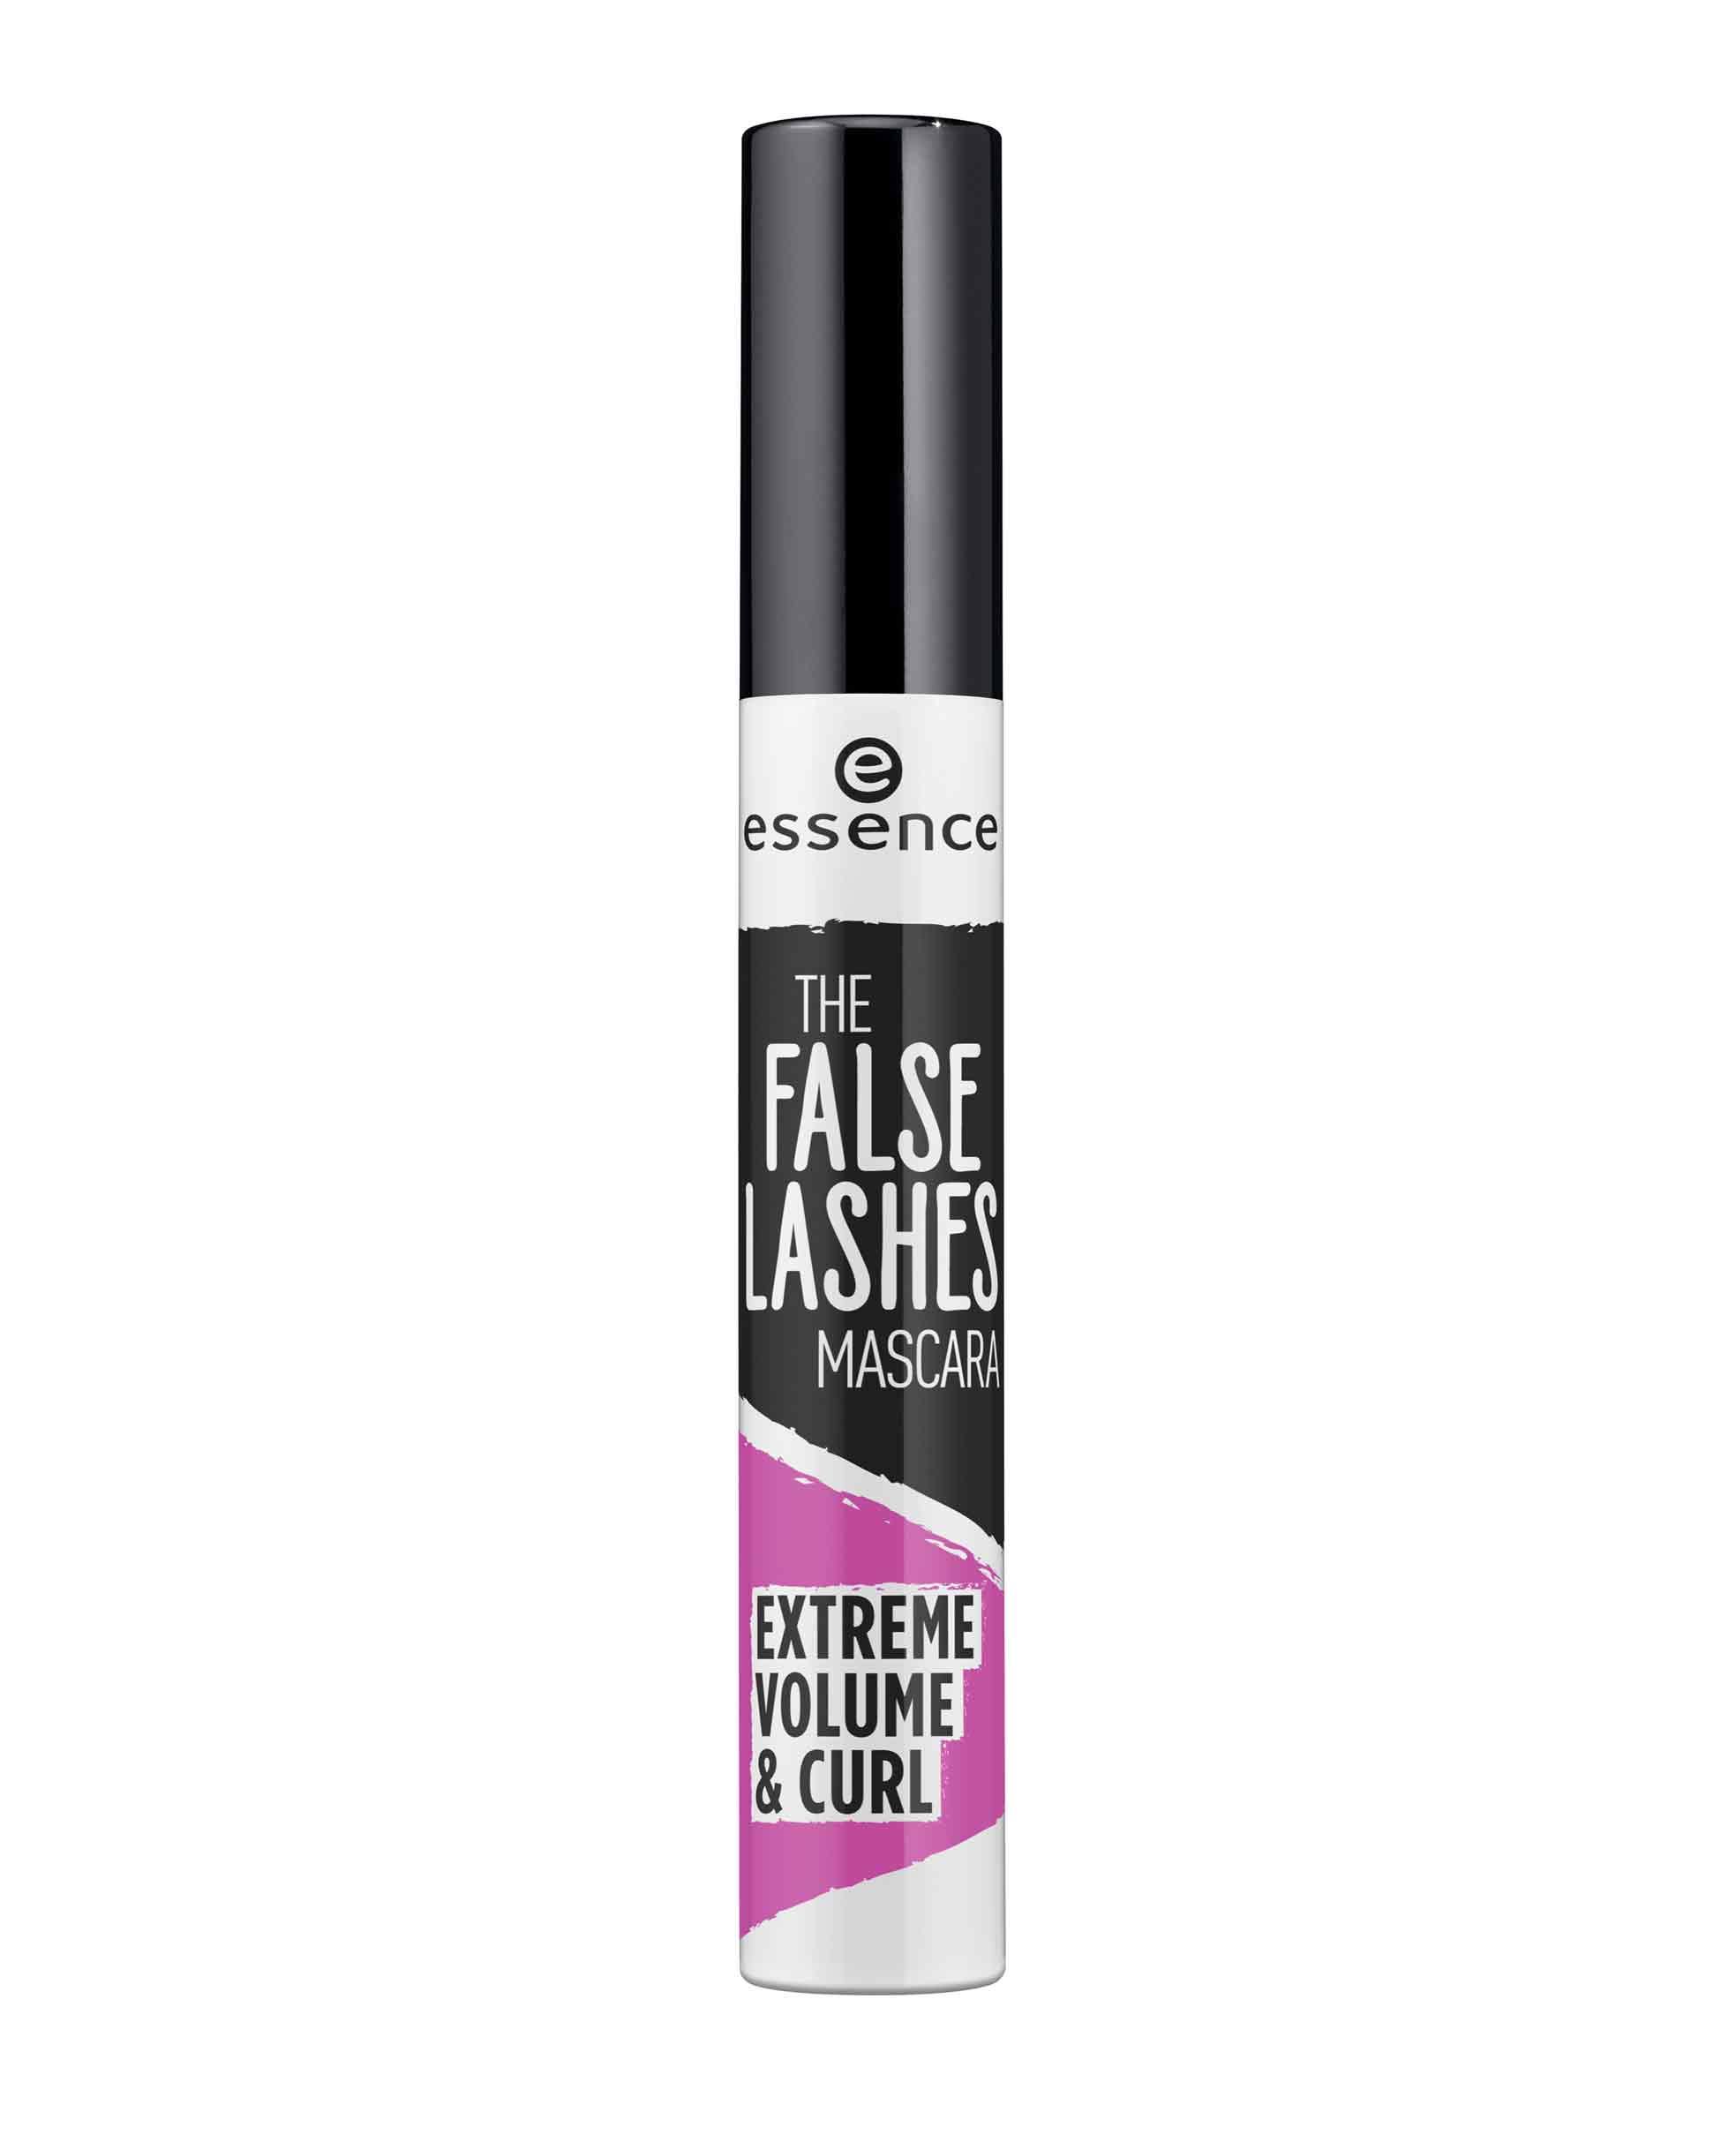 Essence The False Lashes Mascara Extreme Volume & Curl